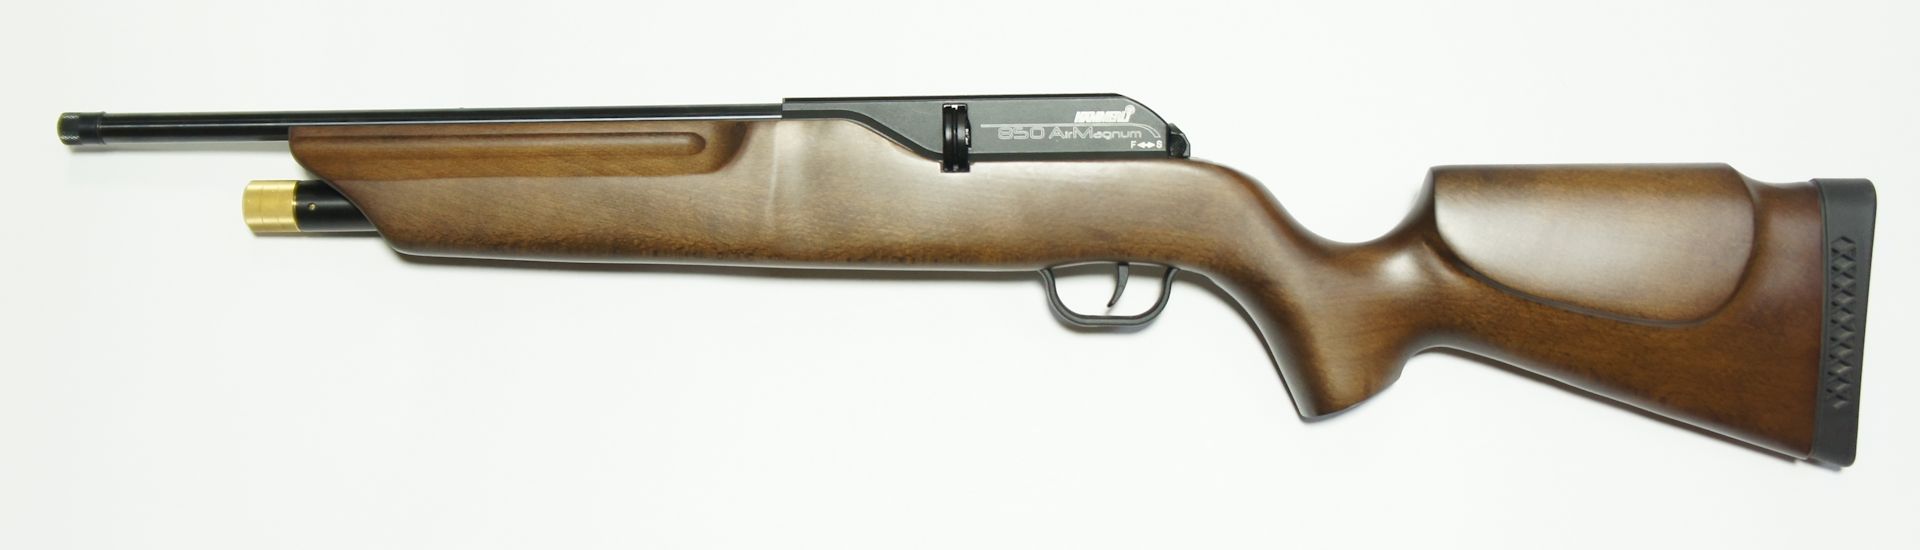 850 AirMagnum Classic Carbine mit Laufgewinde 0,5 Zoll UNF 